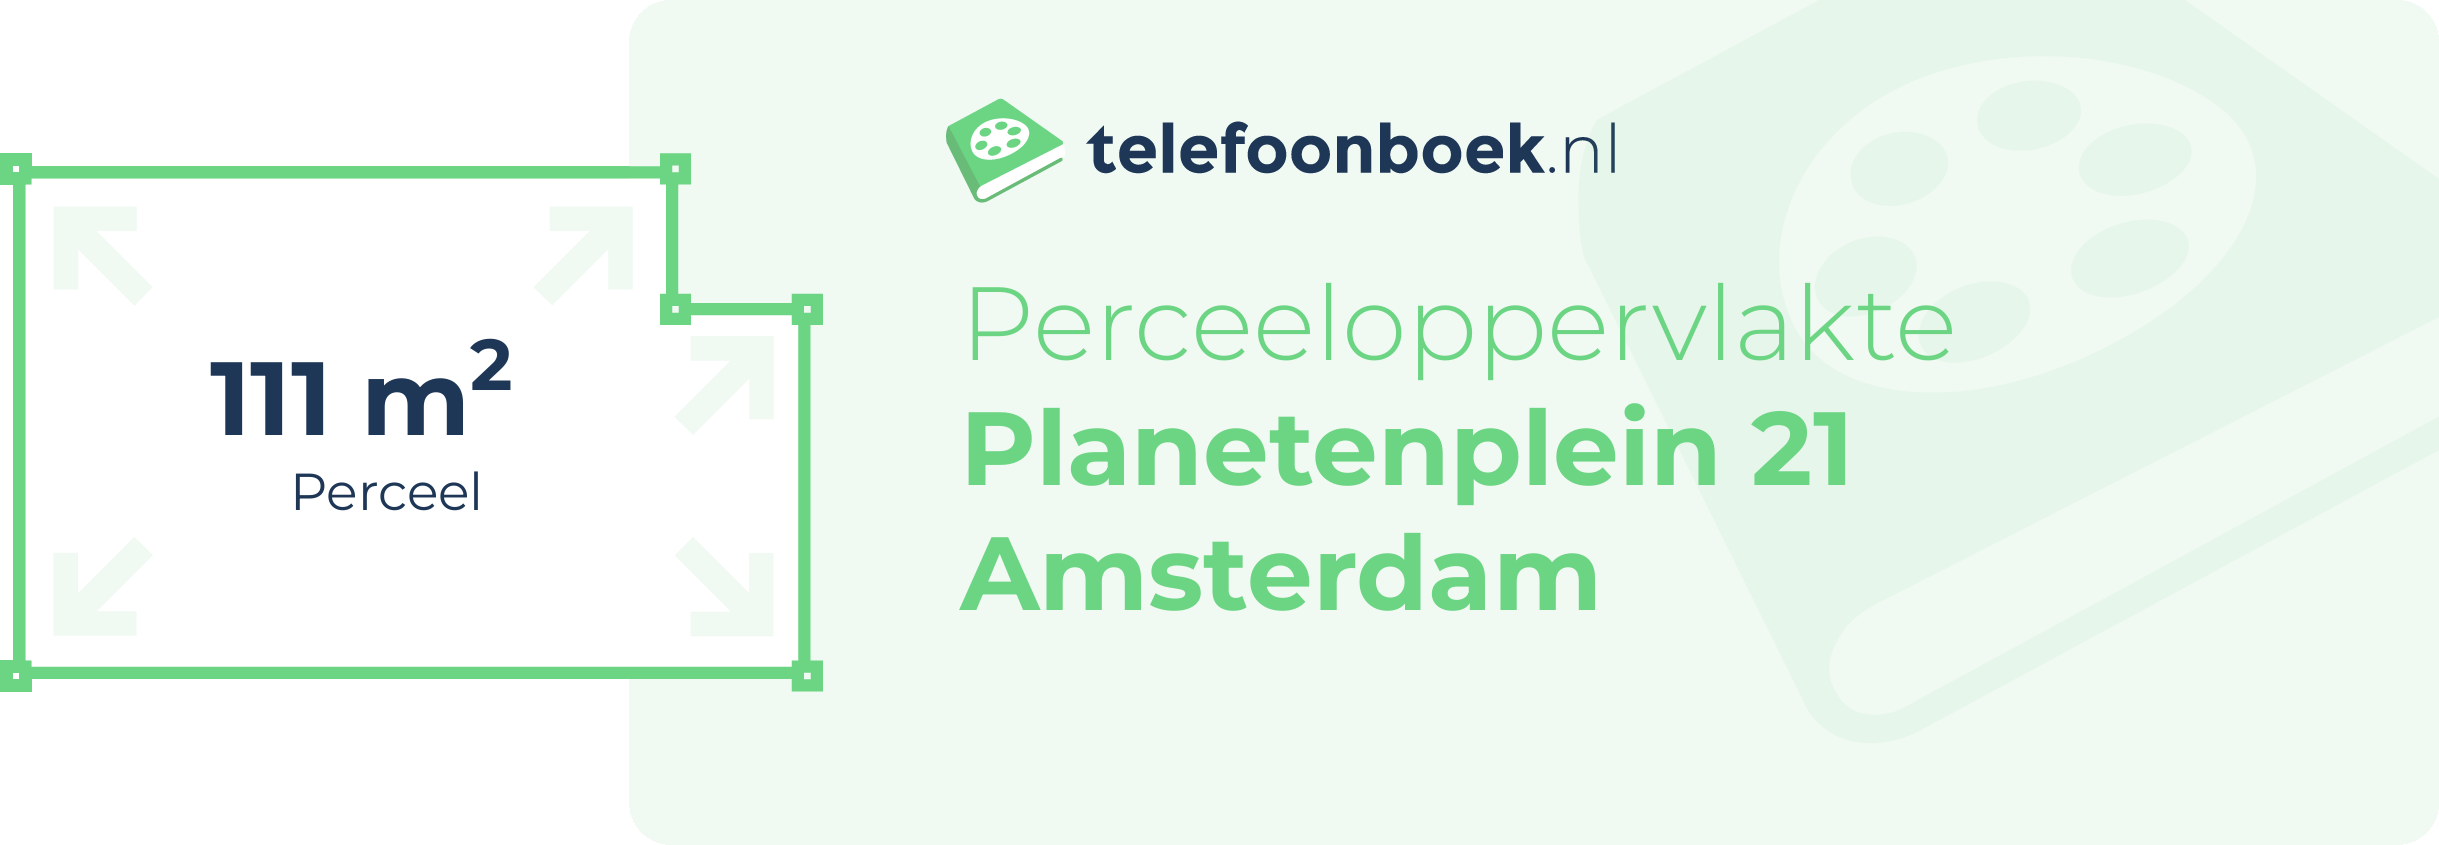 Perceeloppervlakte Planetenplein 21 Amsterdam